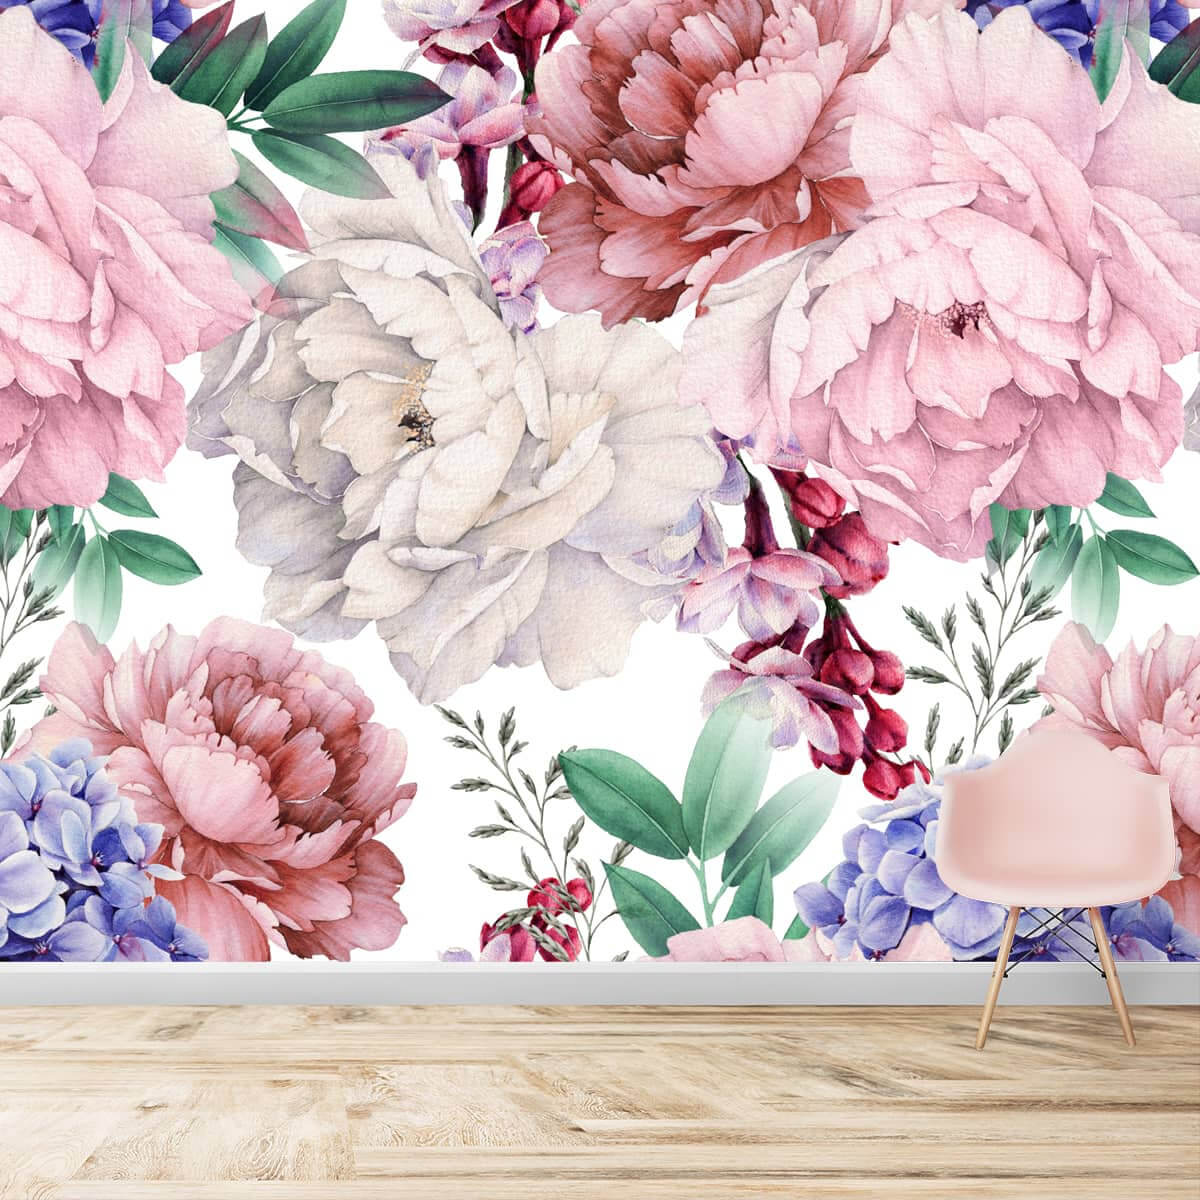 2- Floral wallpaper